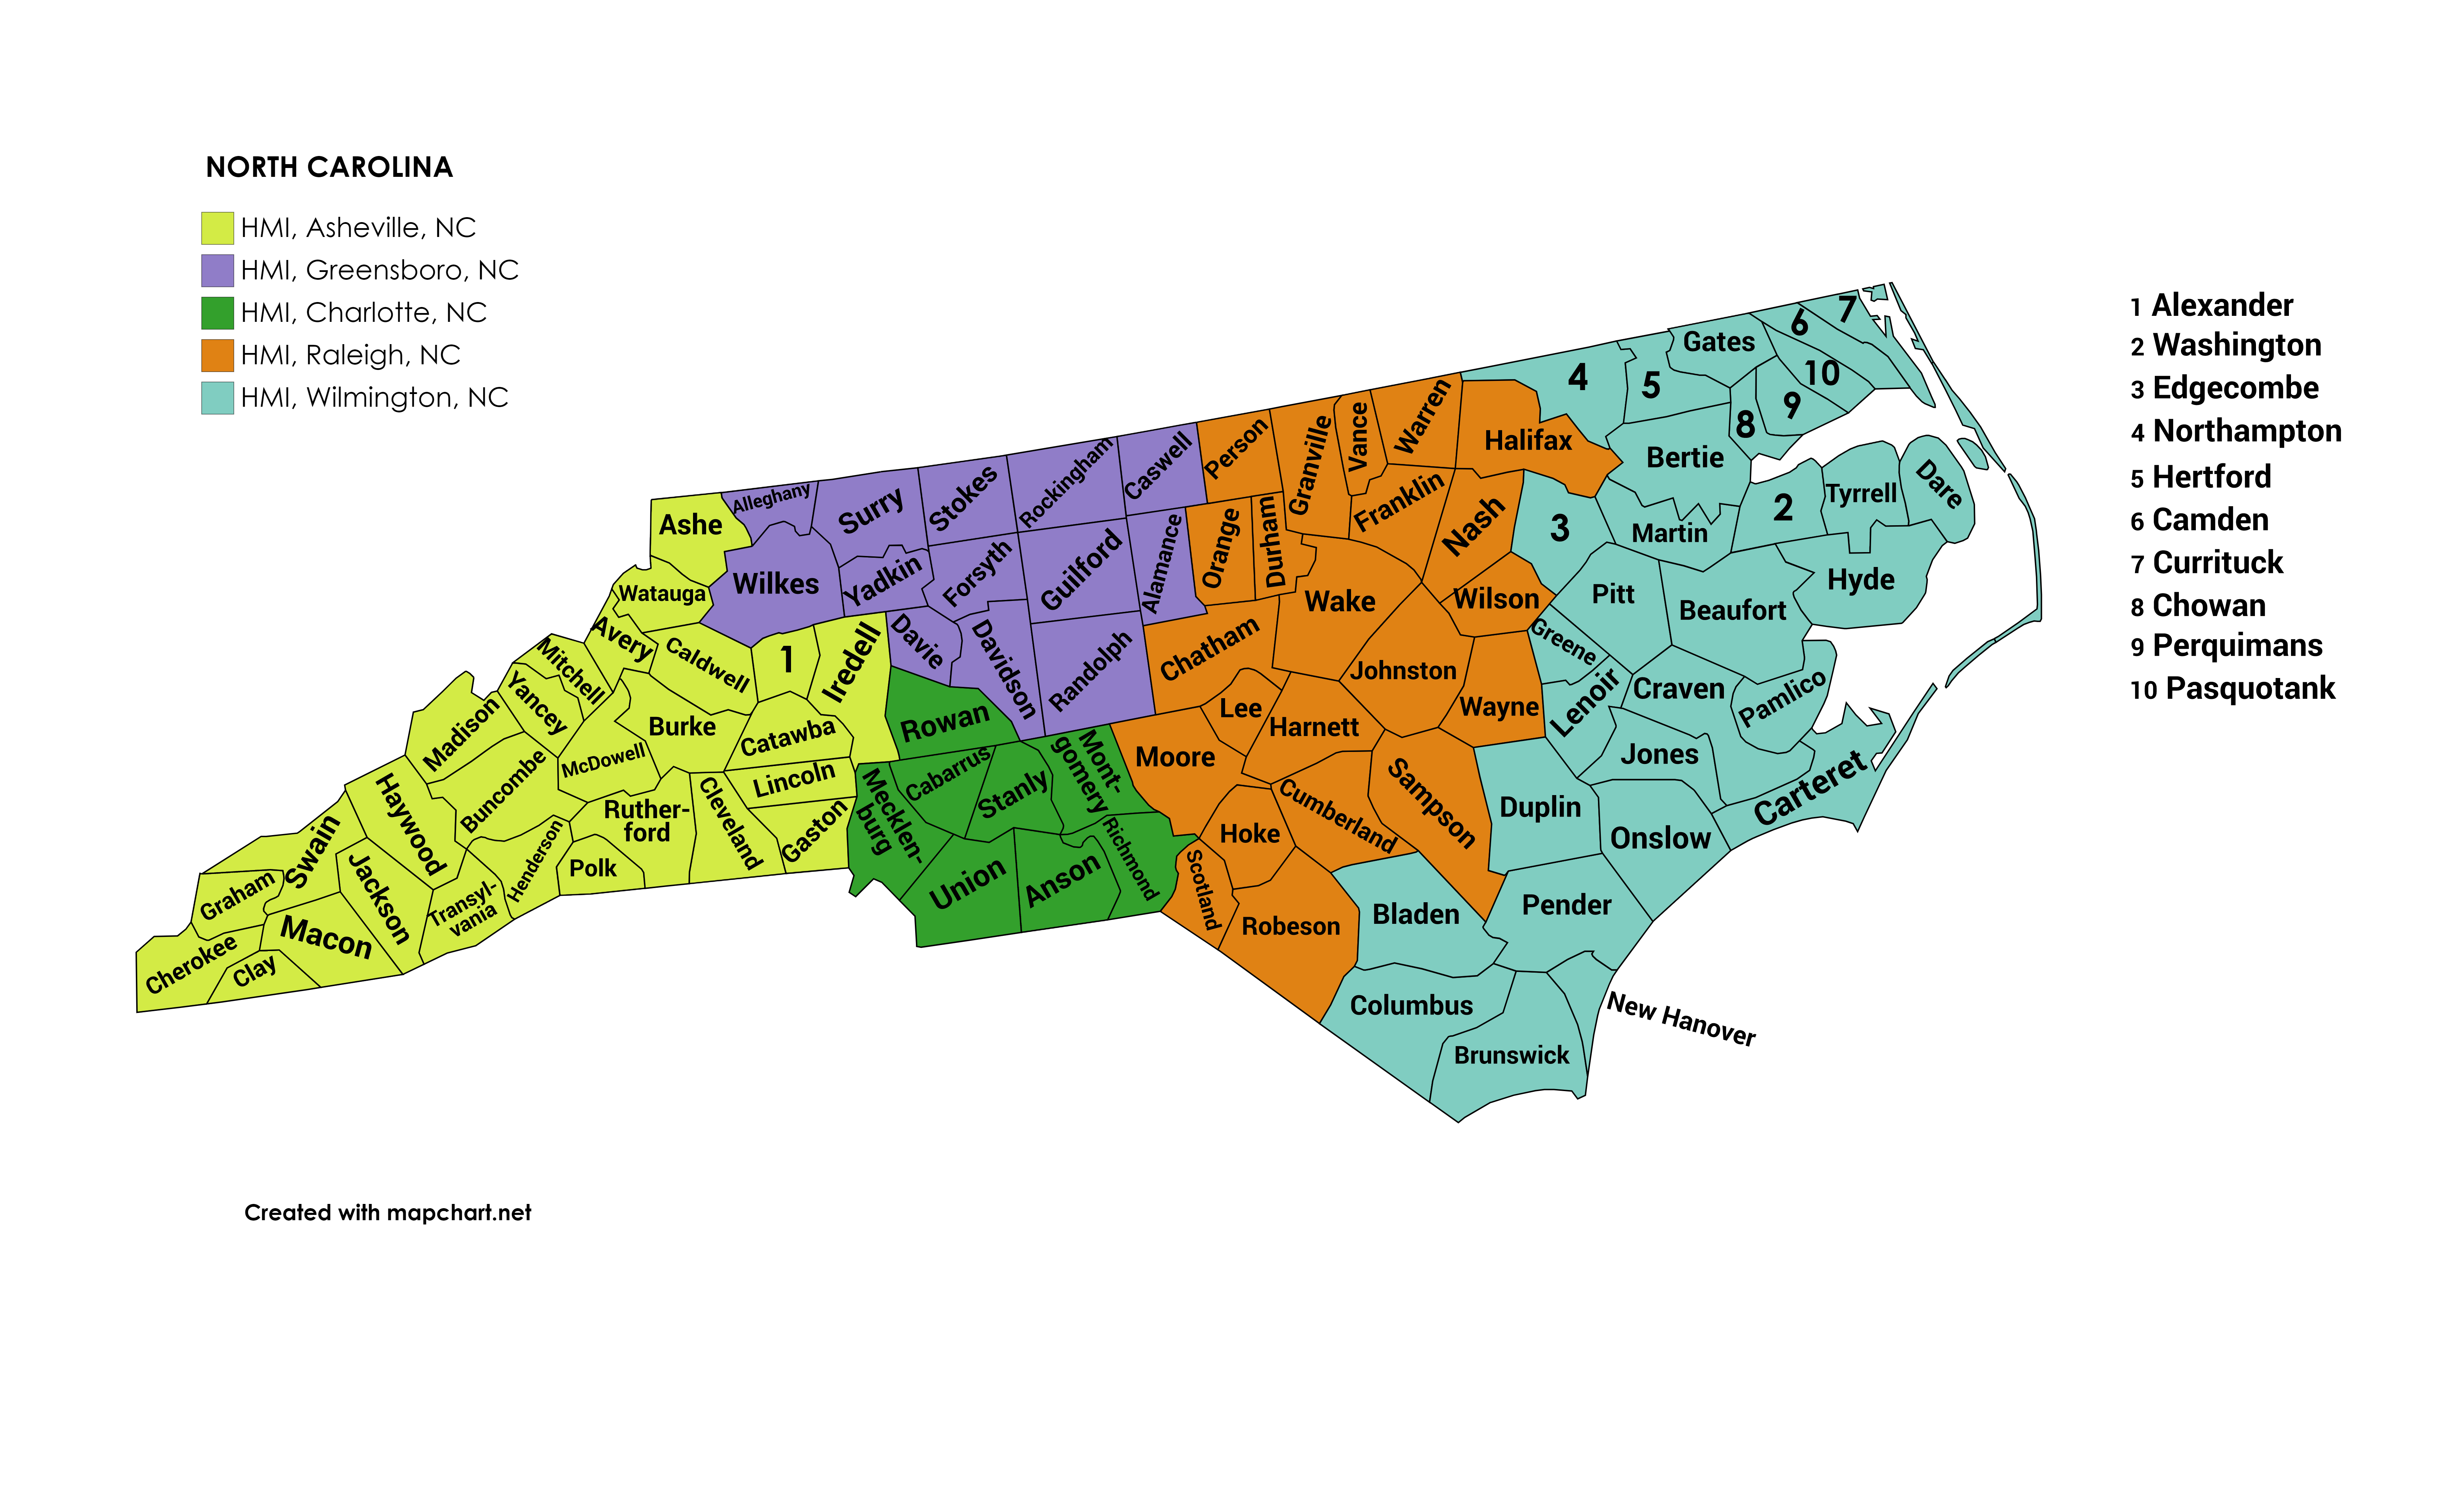 Watch North Carolina's Counties Take Shape